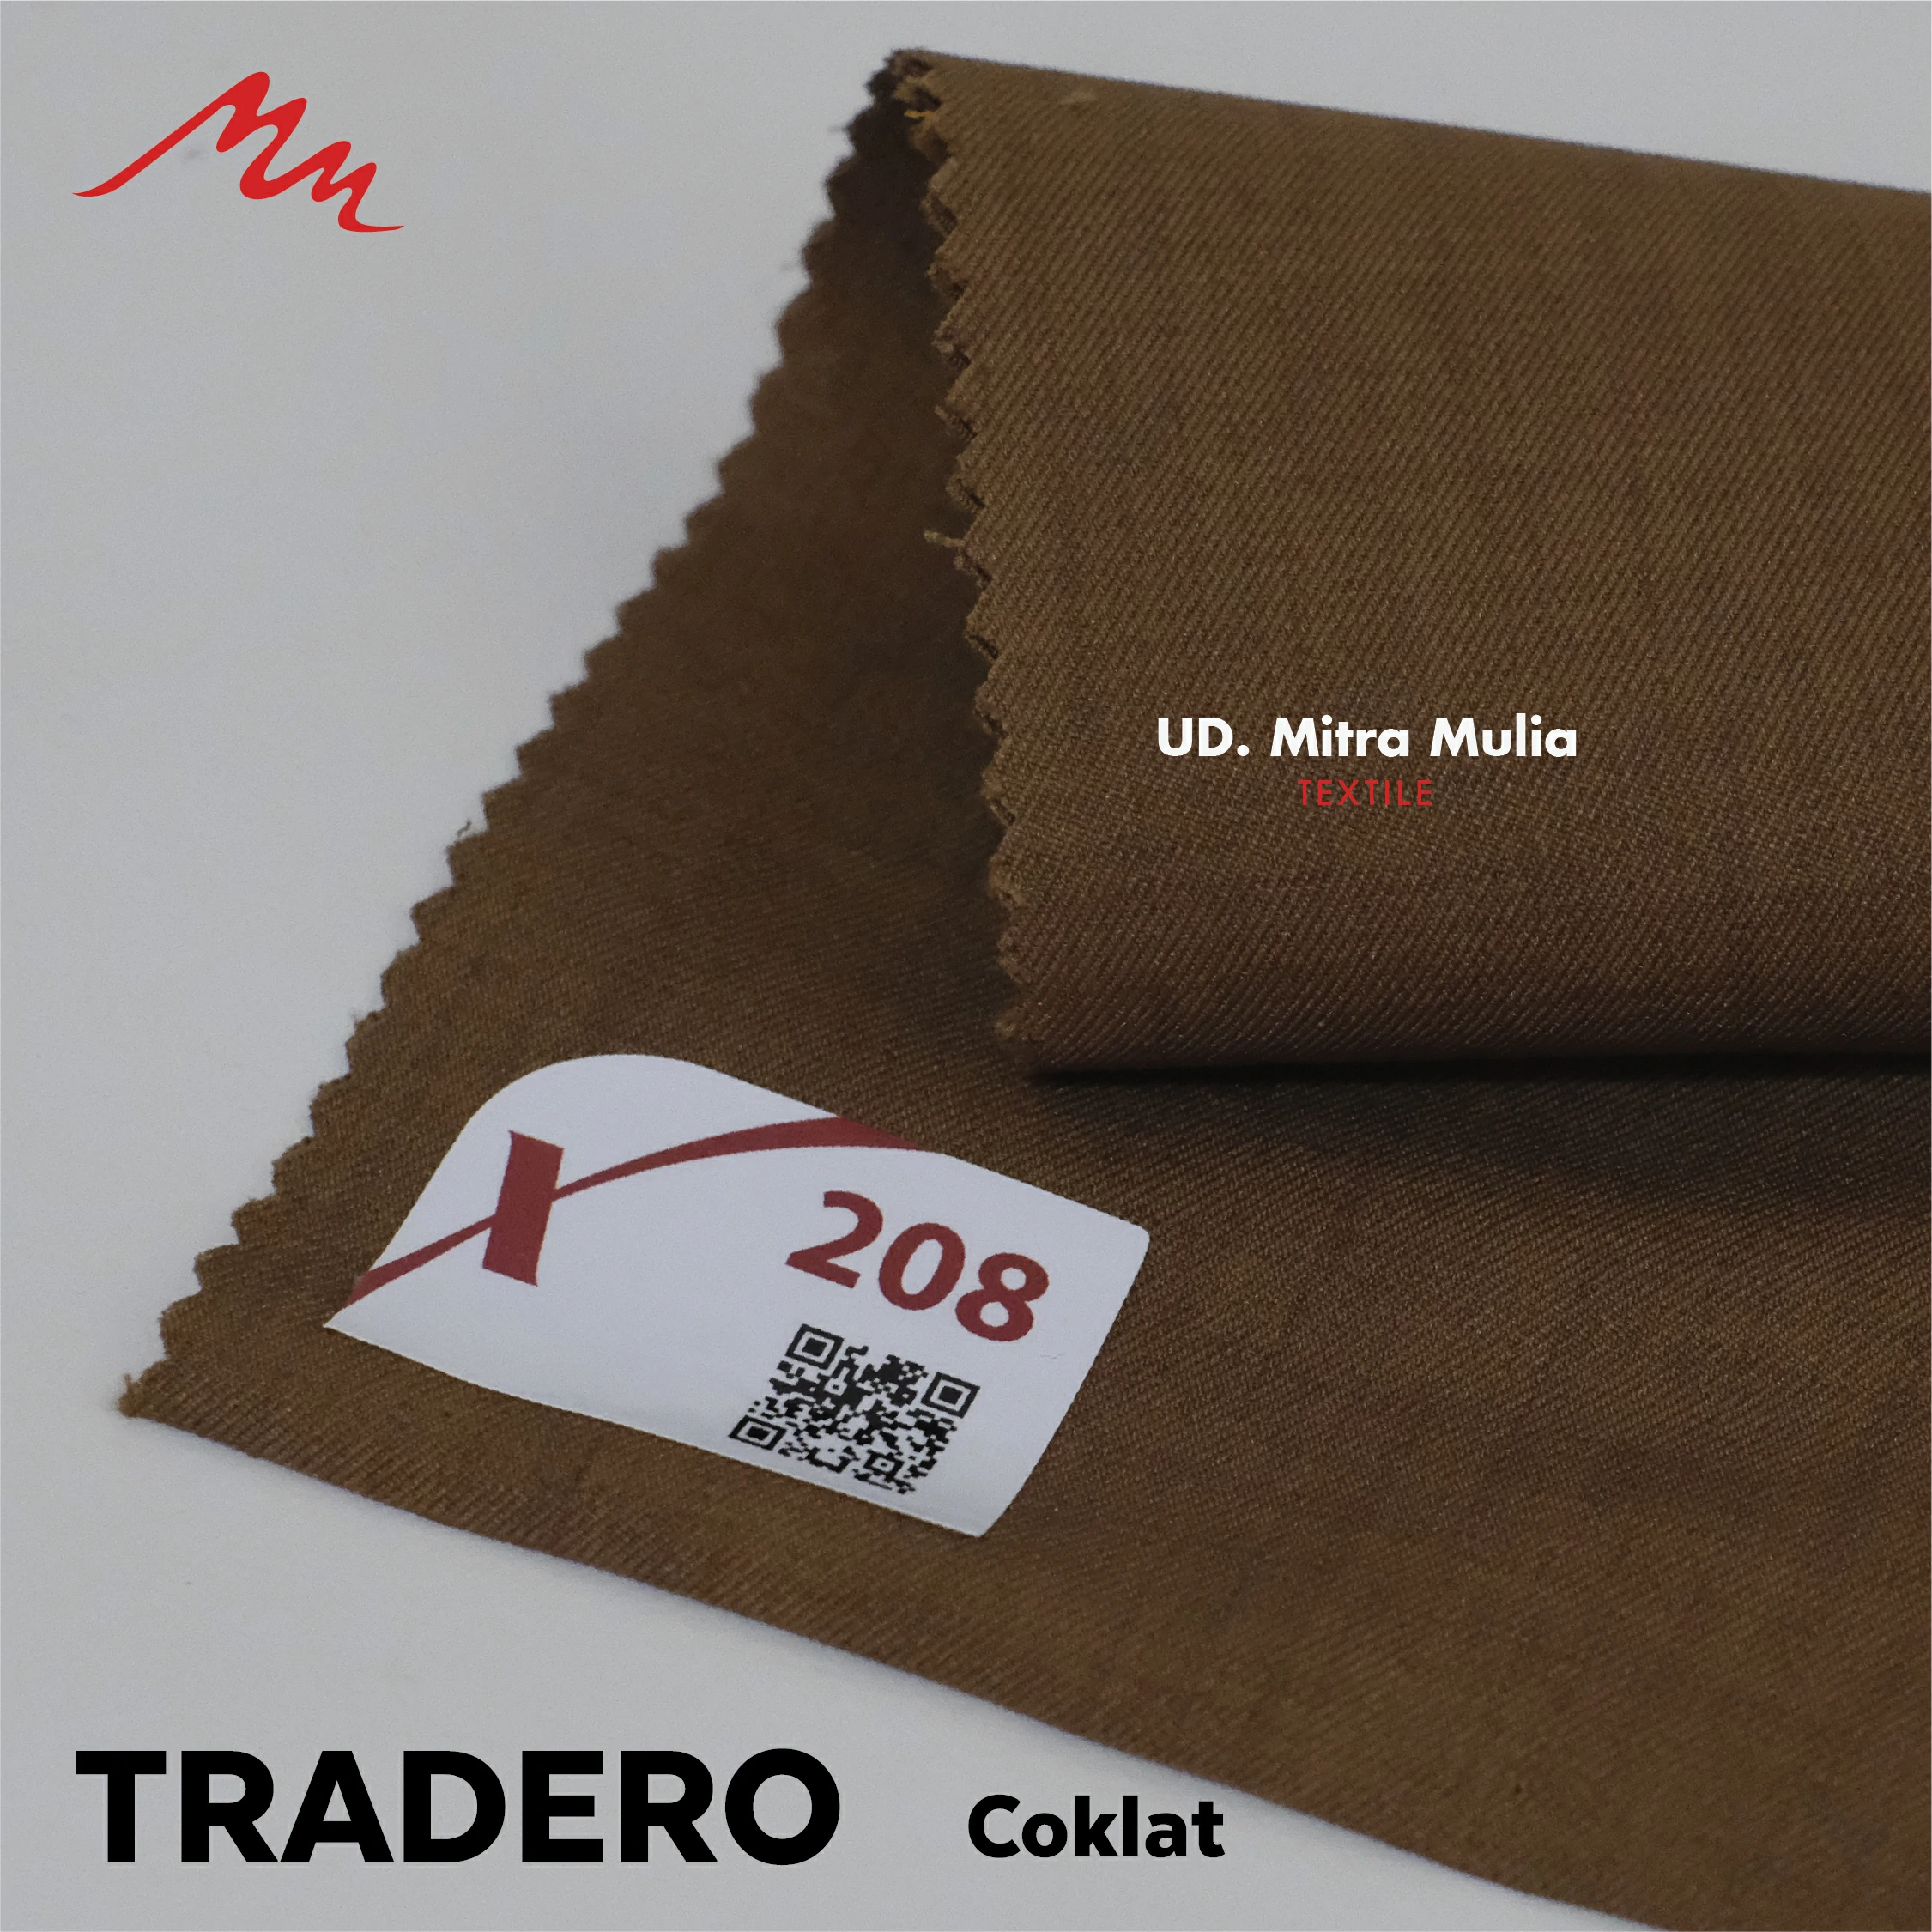 Gambar 2. Tradero Kode 208 Warna Coklat Part 2